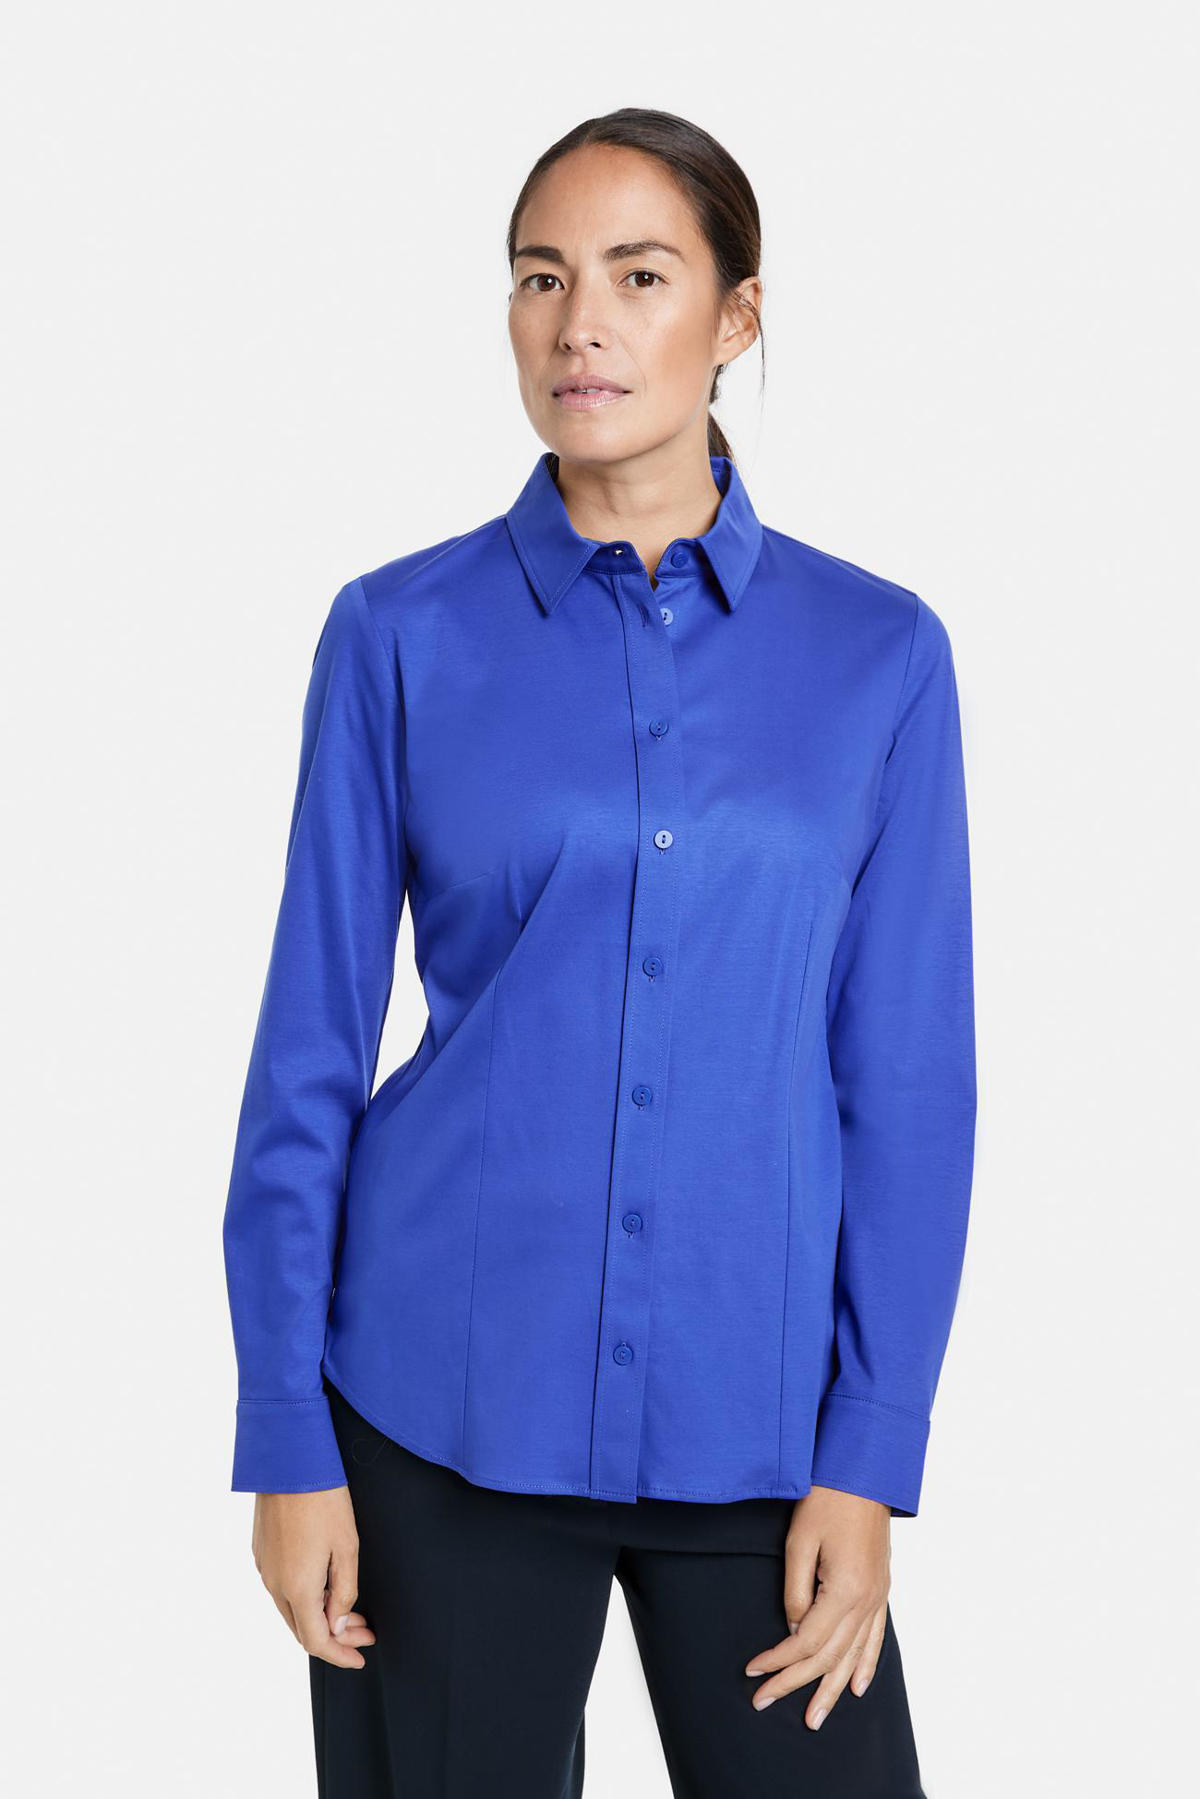 Quagga lineair Overtollig Gerry Weber blouse blauw | wehkamp